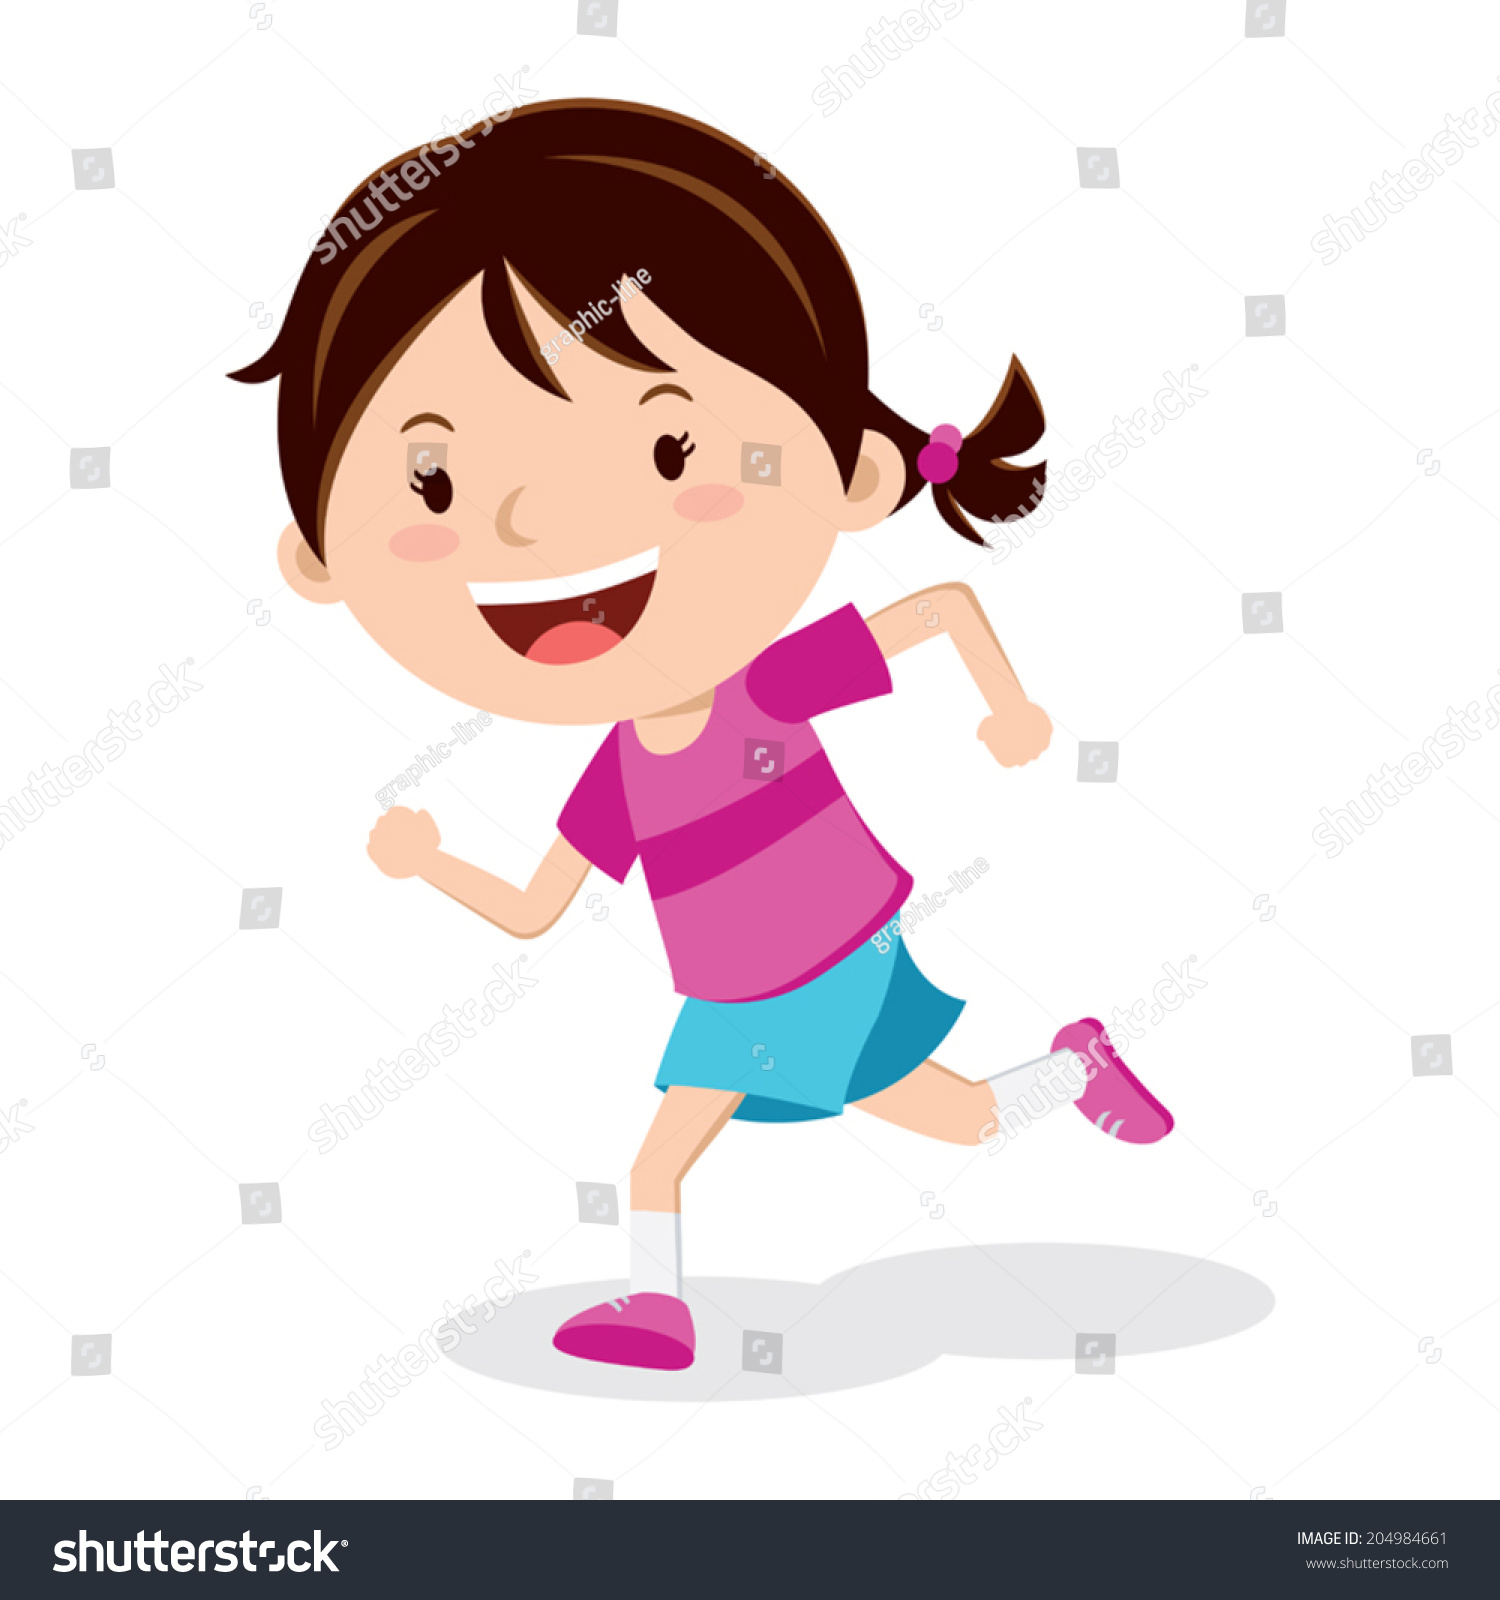 clipart of girl running - photo #16